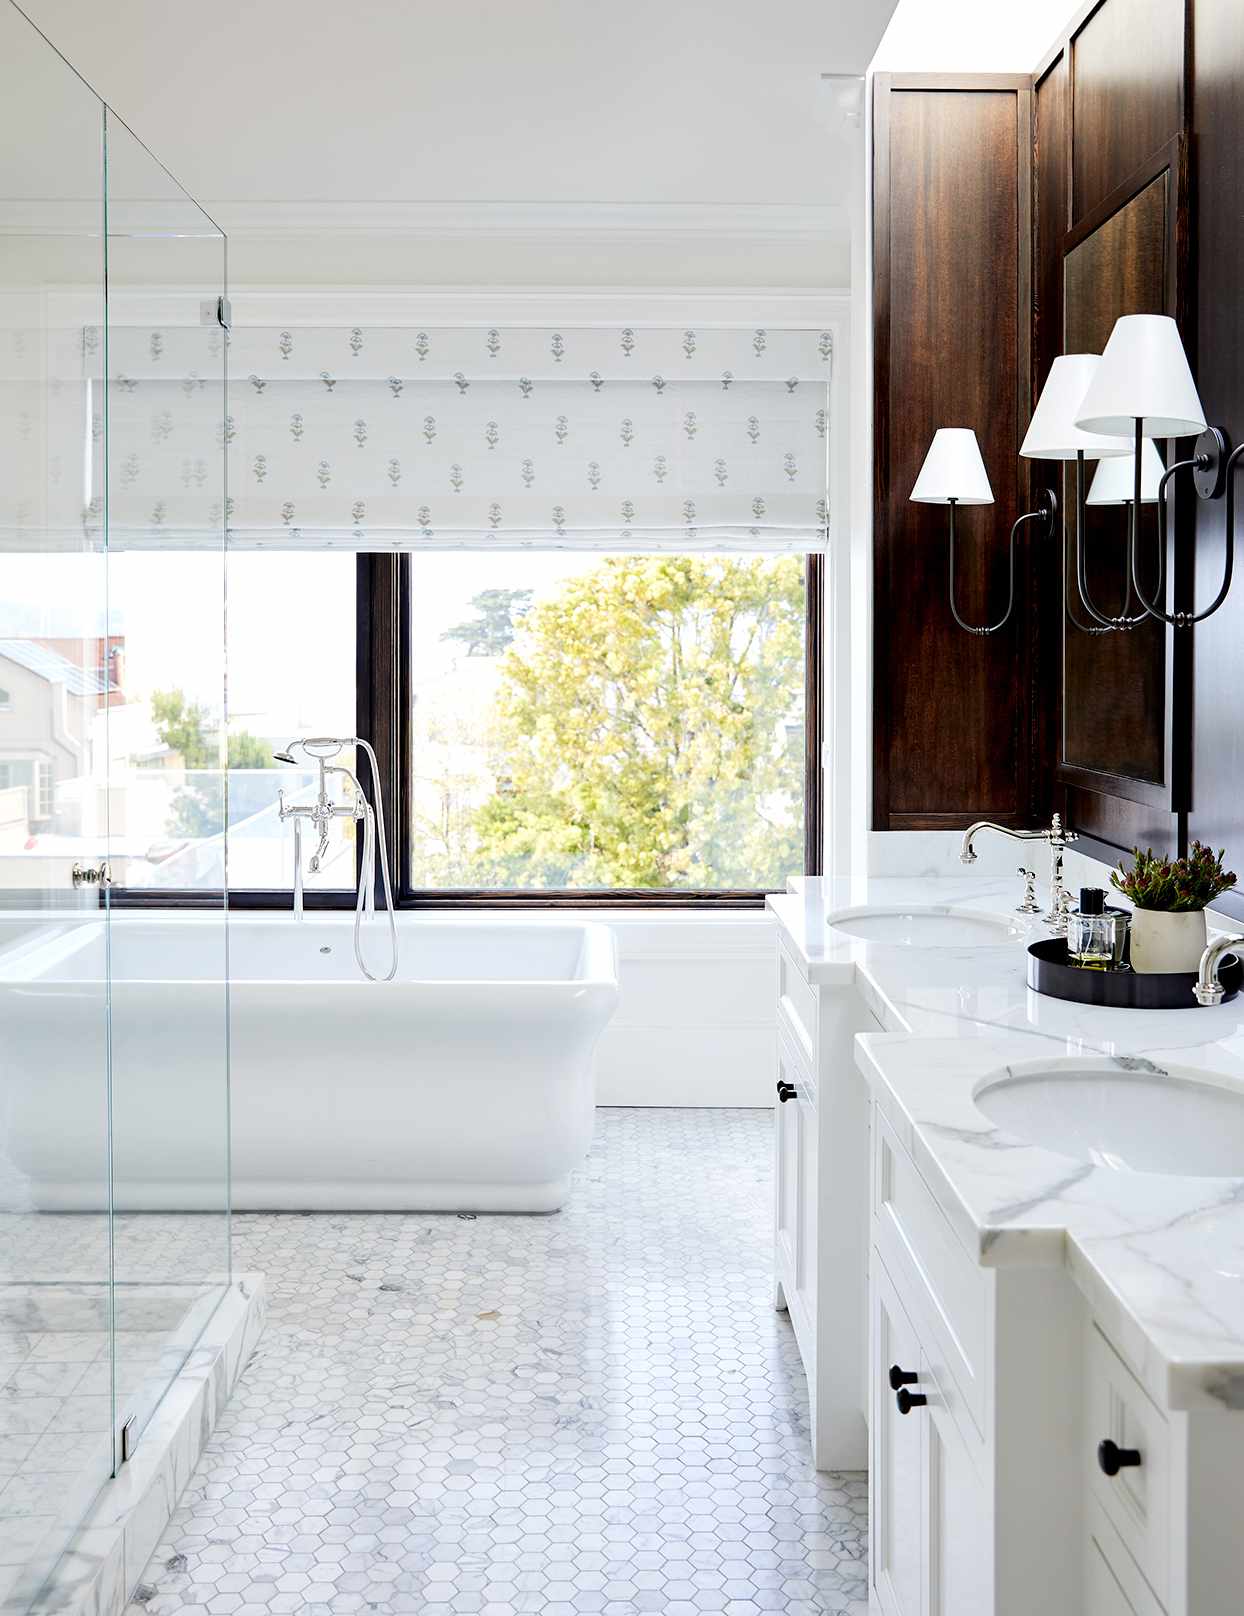 Details about   16'' Shower Wall Corner Shelf Shampoo Bath Rack Towel Storage Holder   *# 